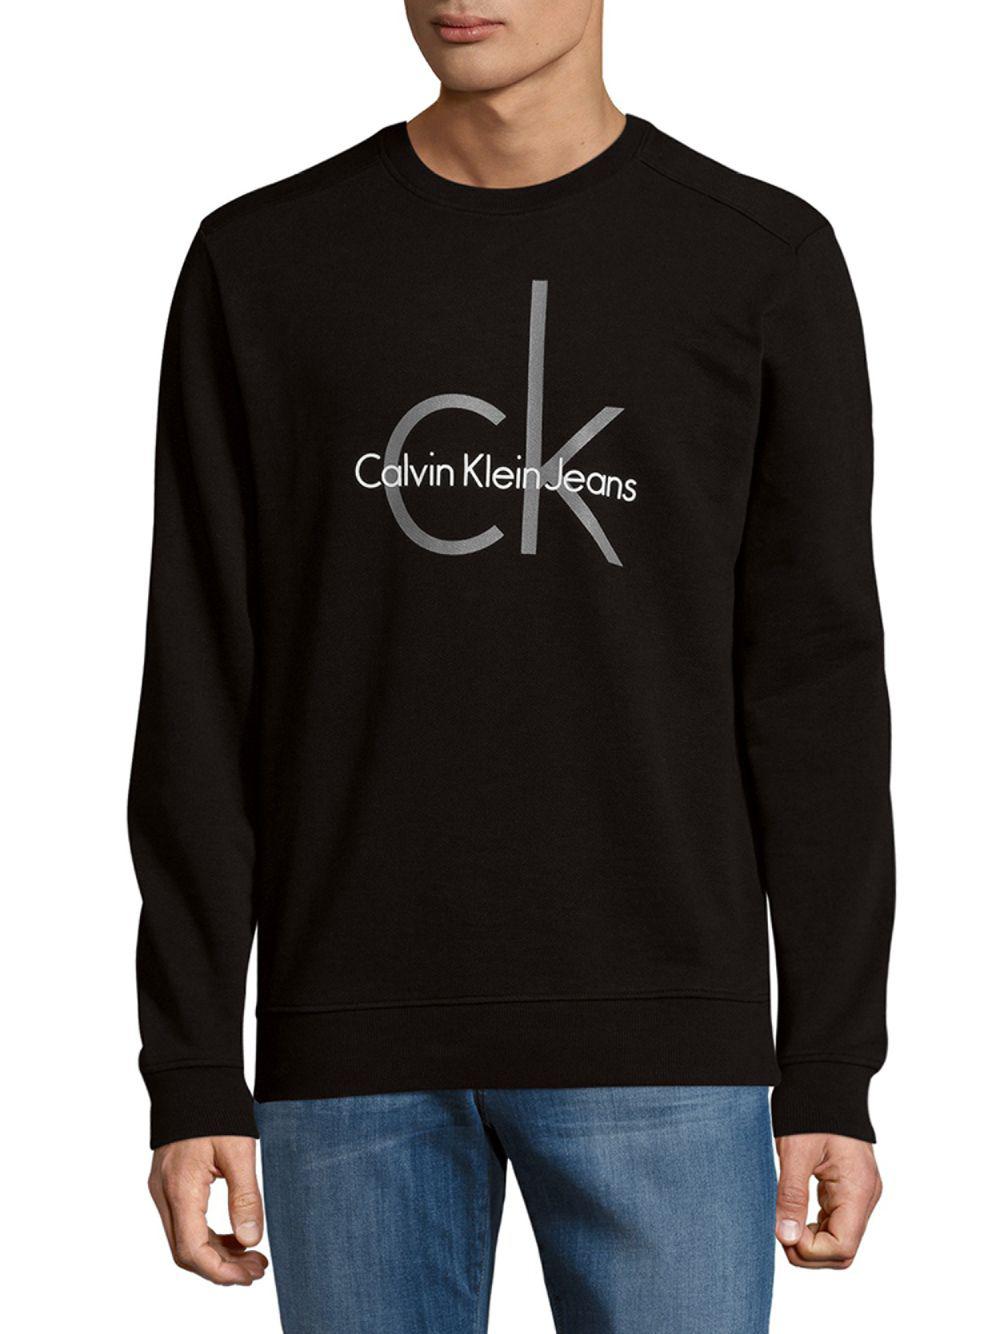 Calvin Klein Crew Neck Top Sellers, UP TO 68% OFF | www.loop-cn.com